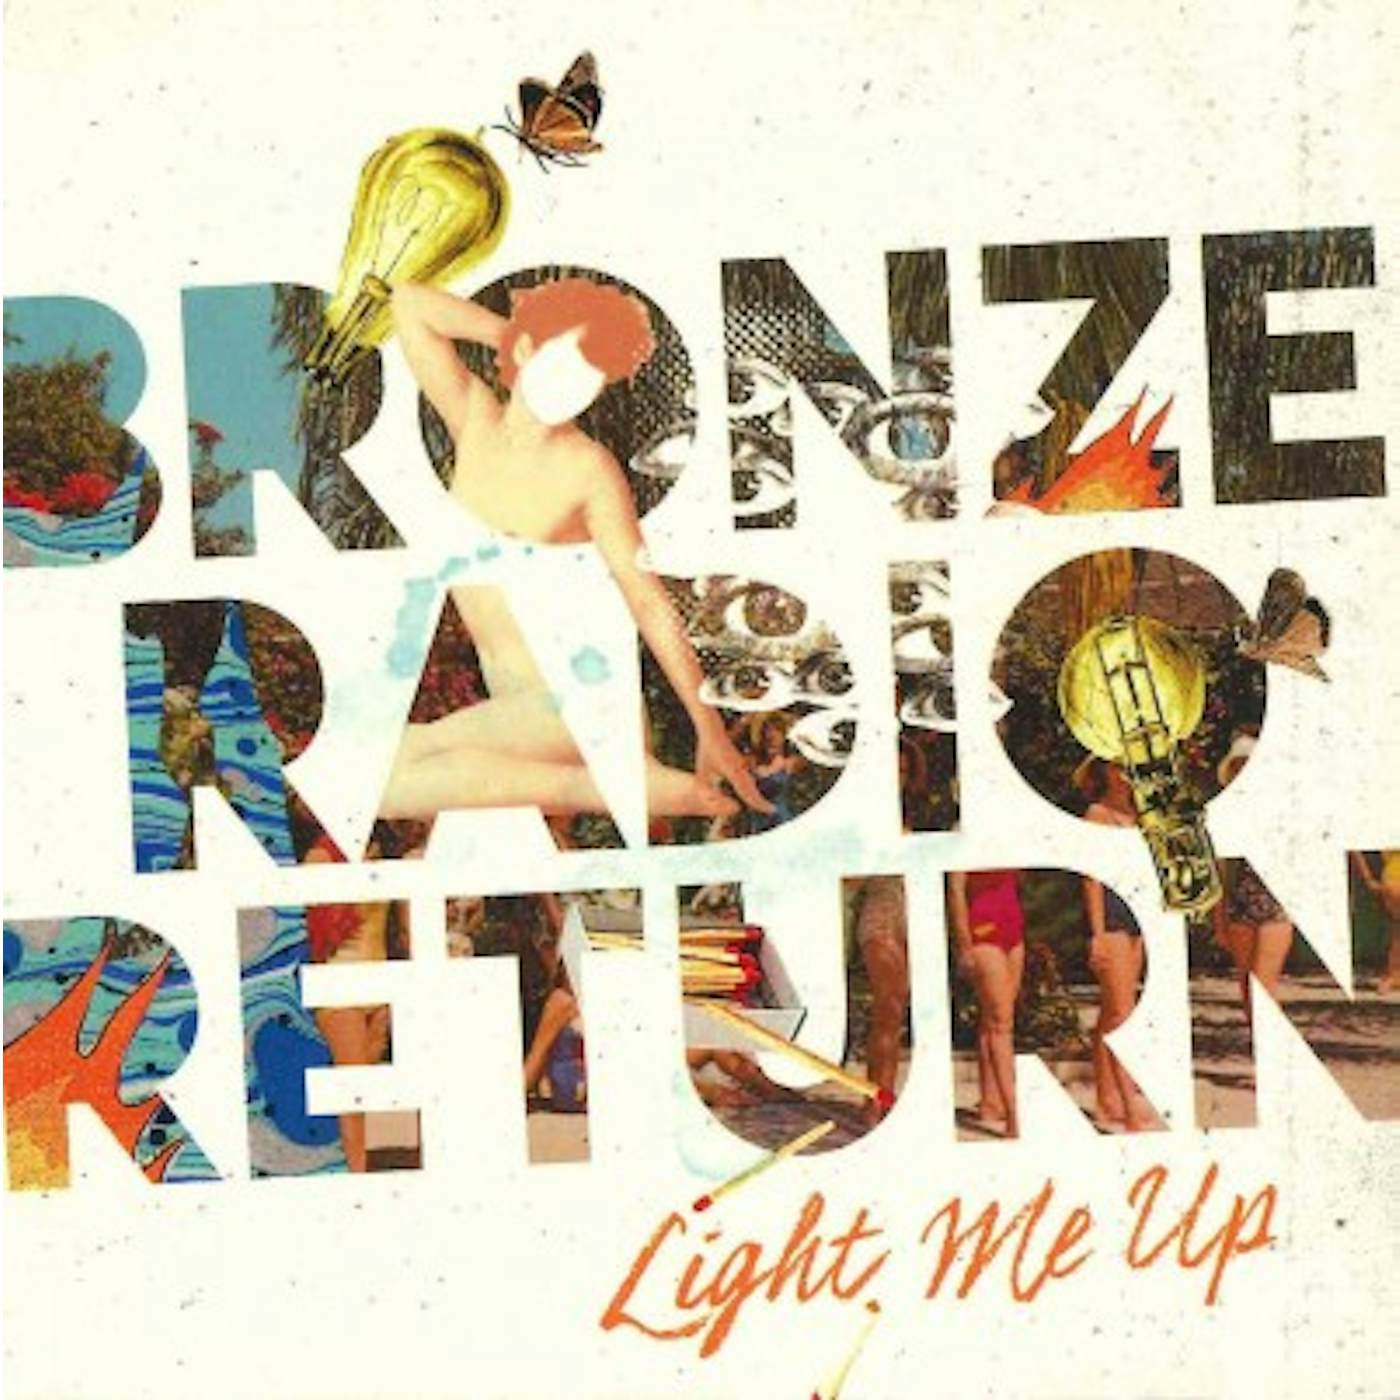 Bronze Radio Return Light Me Up CD